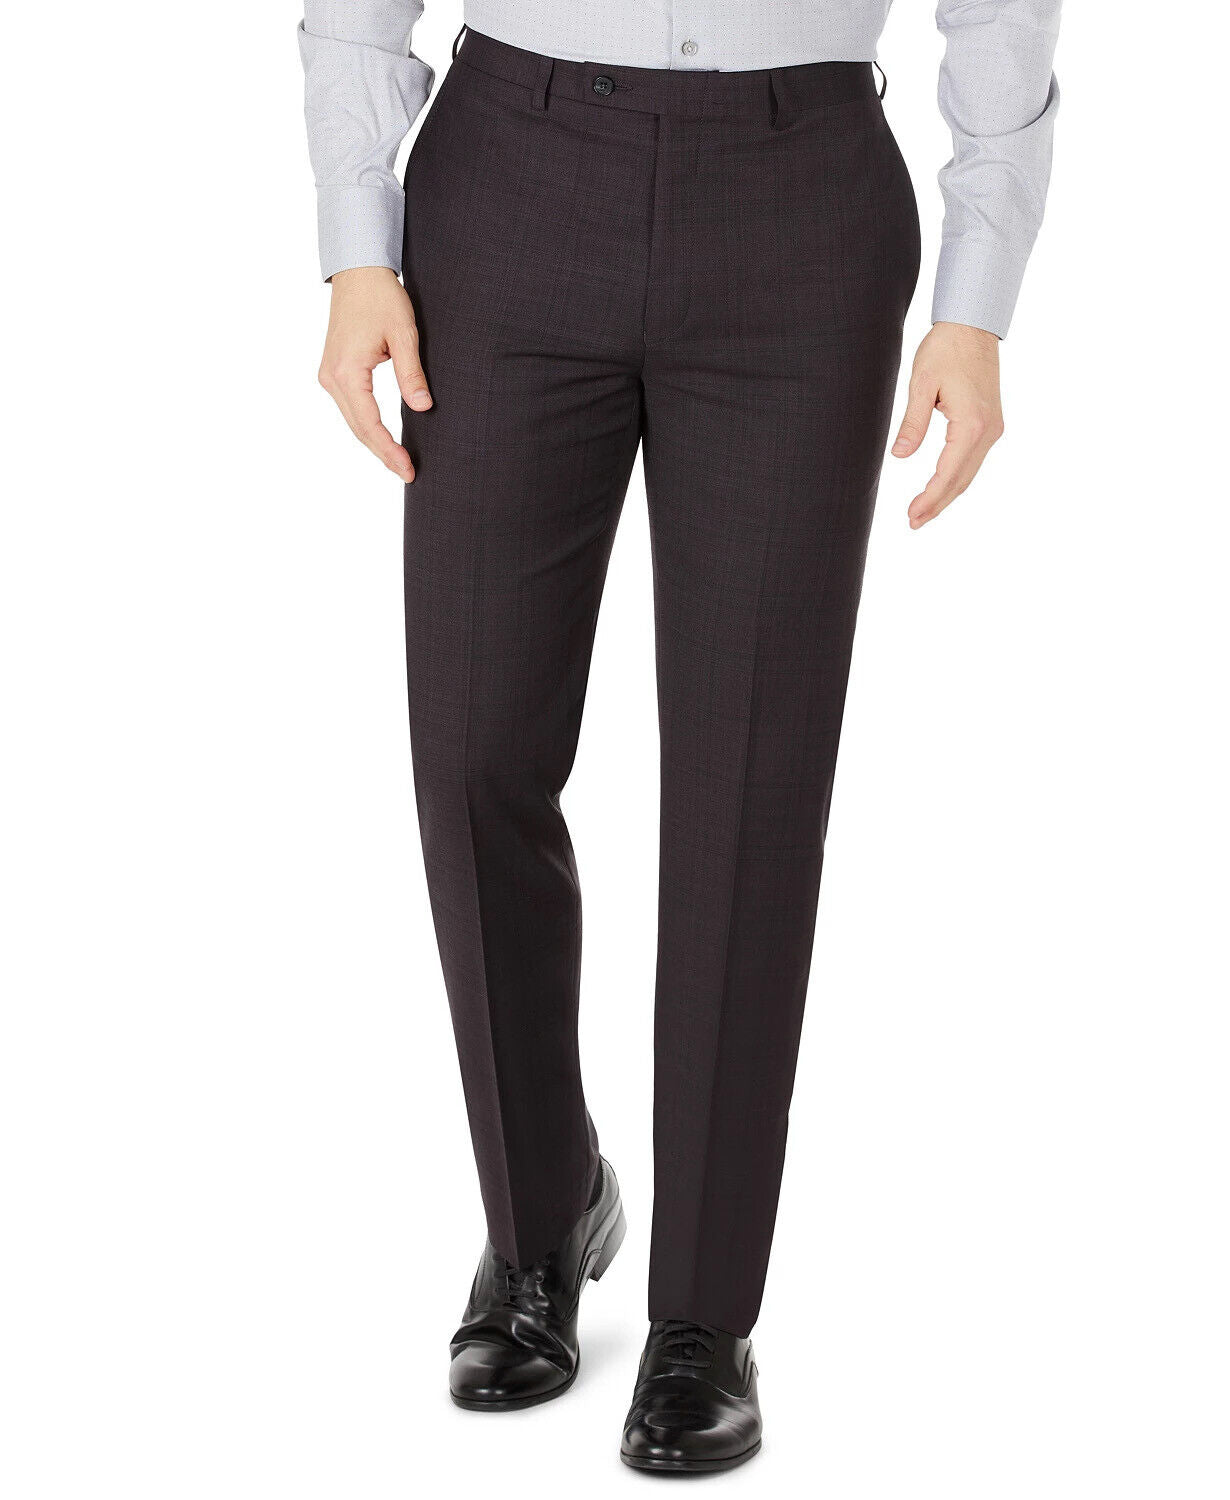 Calvin Klein Men's Skinny Fit Dress Pants 36 x 32 Plaid Burgundy Extra Slim